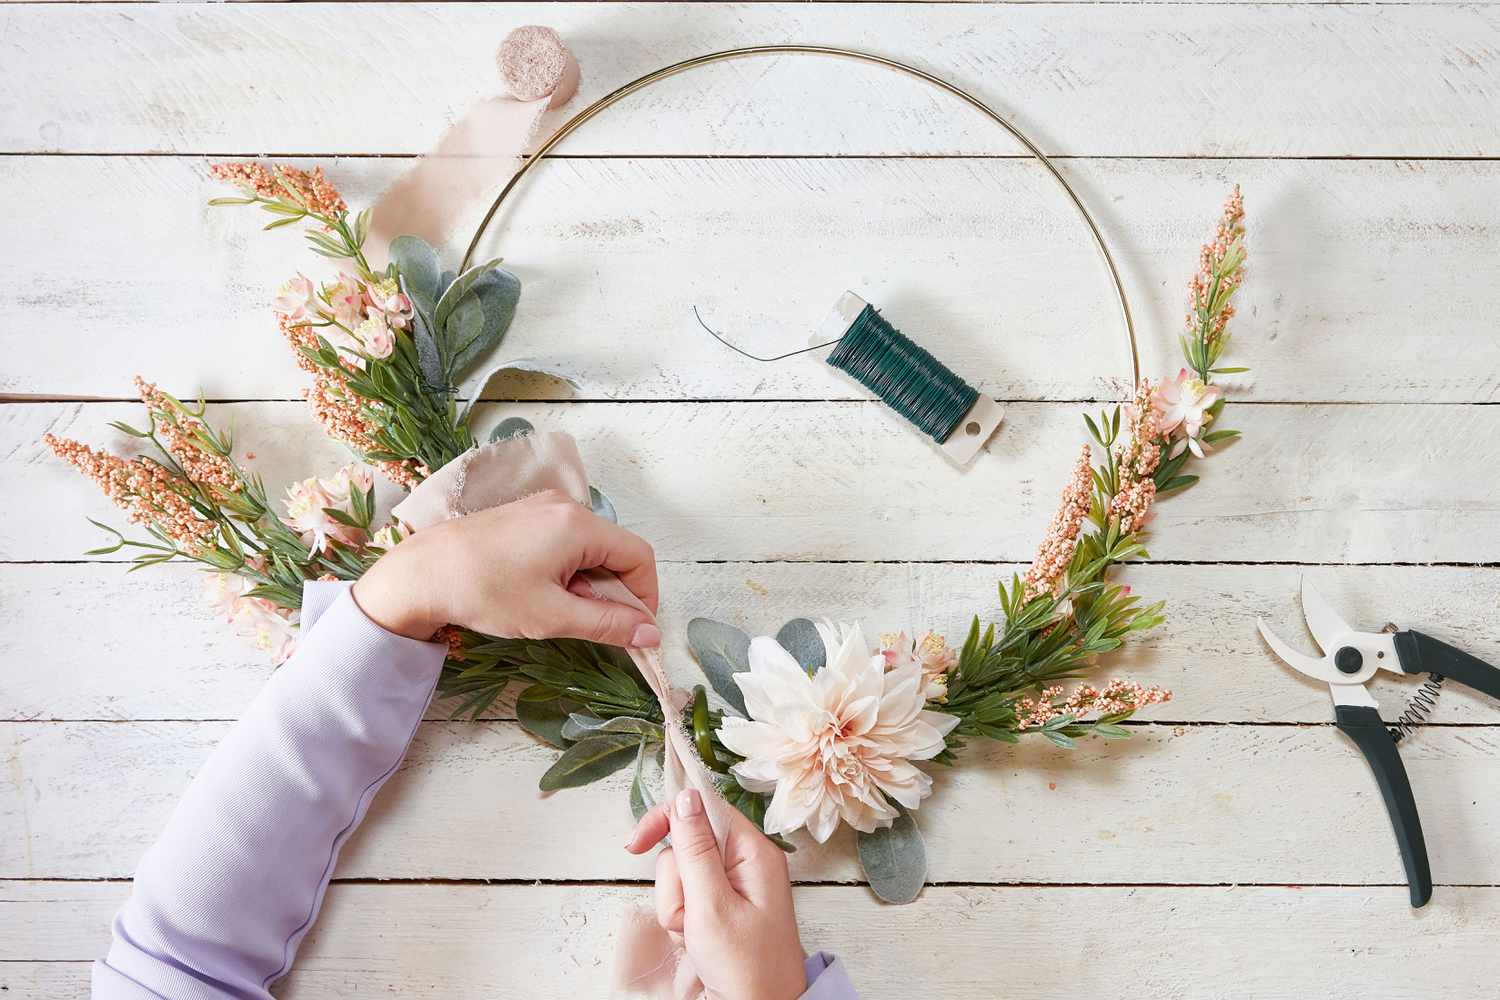 Hand tying ribbon on wreath